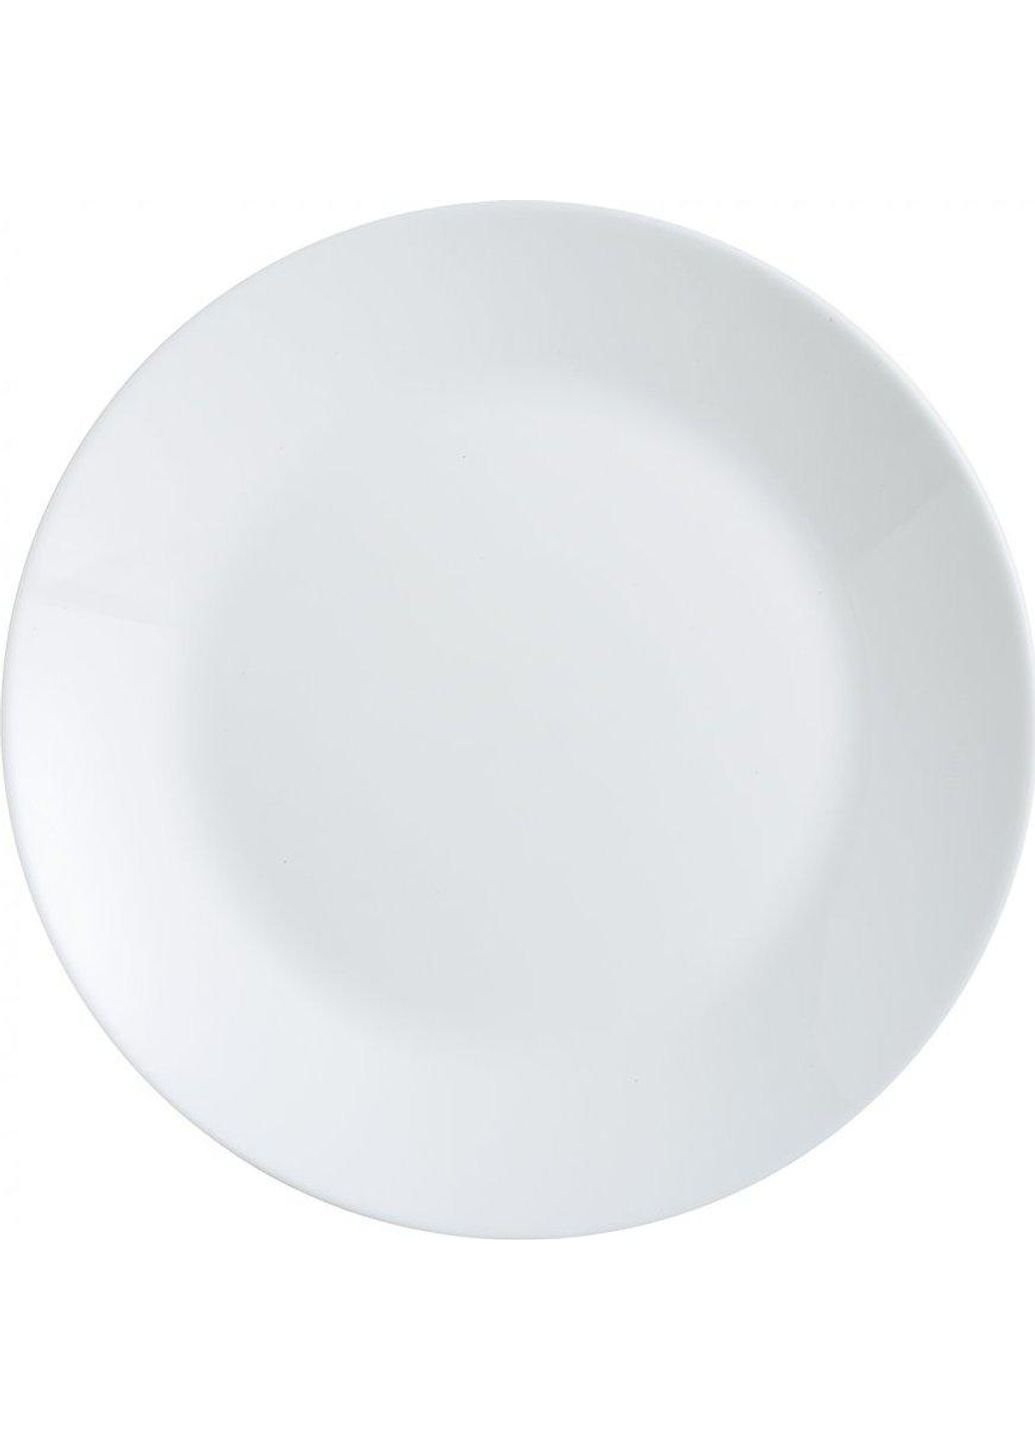 Десертная тарелка Zelie L4120 18 см Arcopal (253545108)